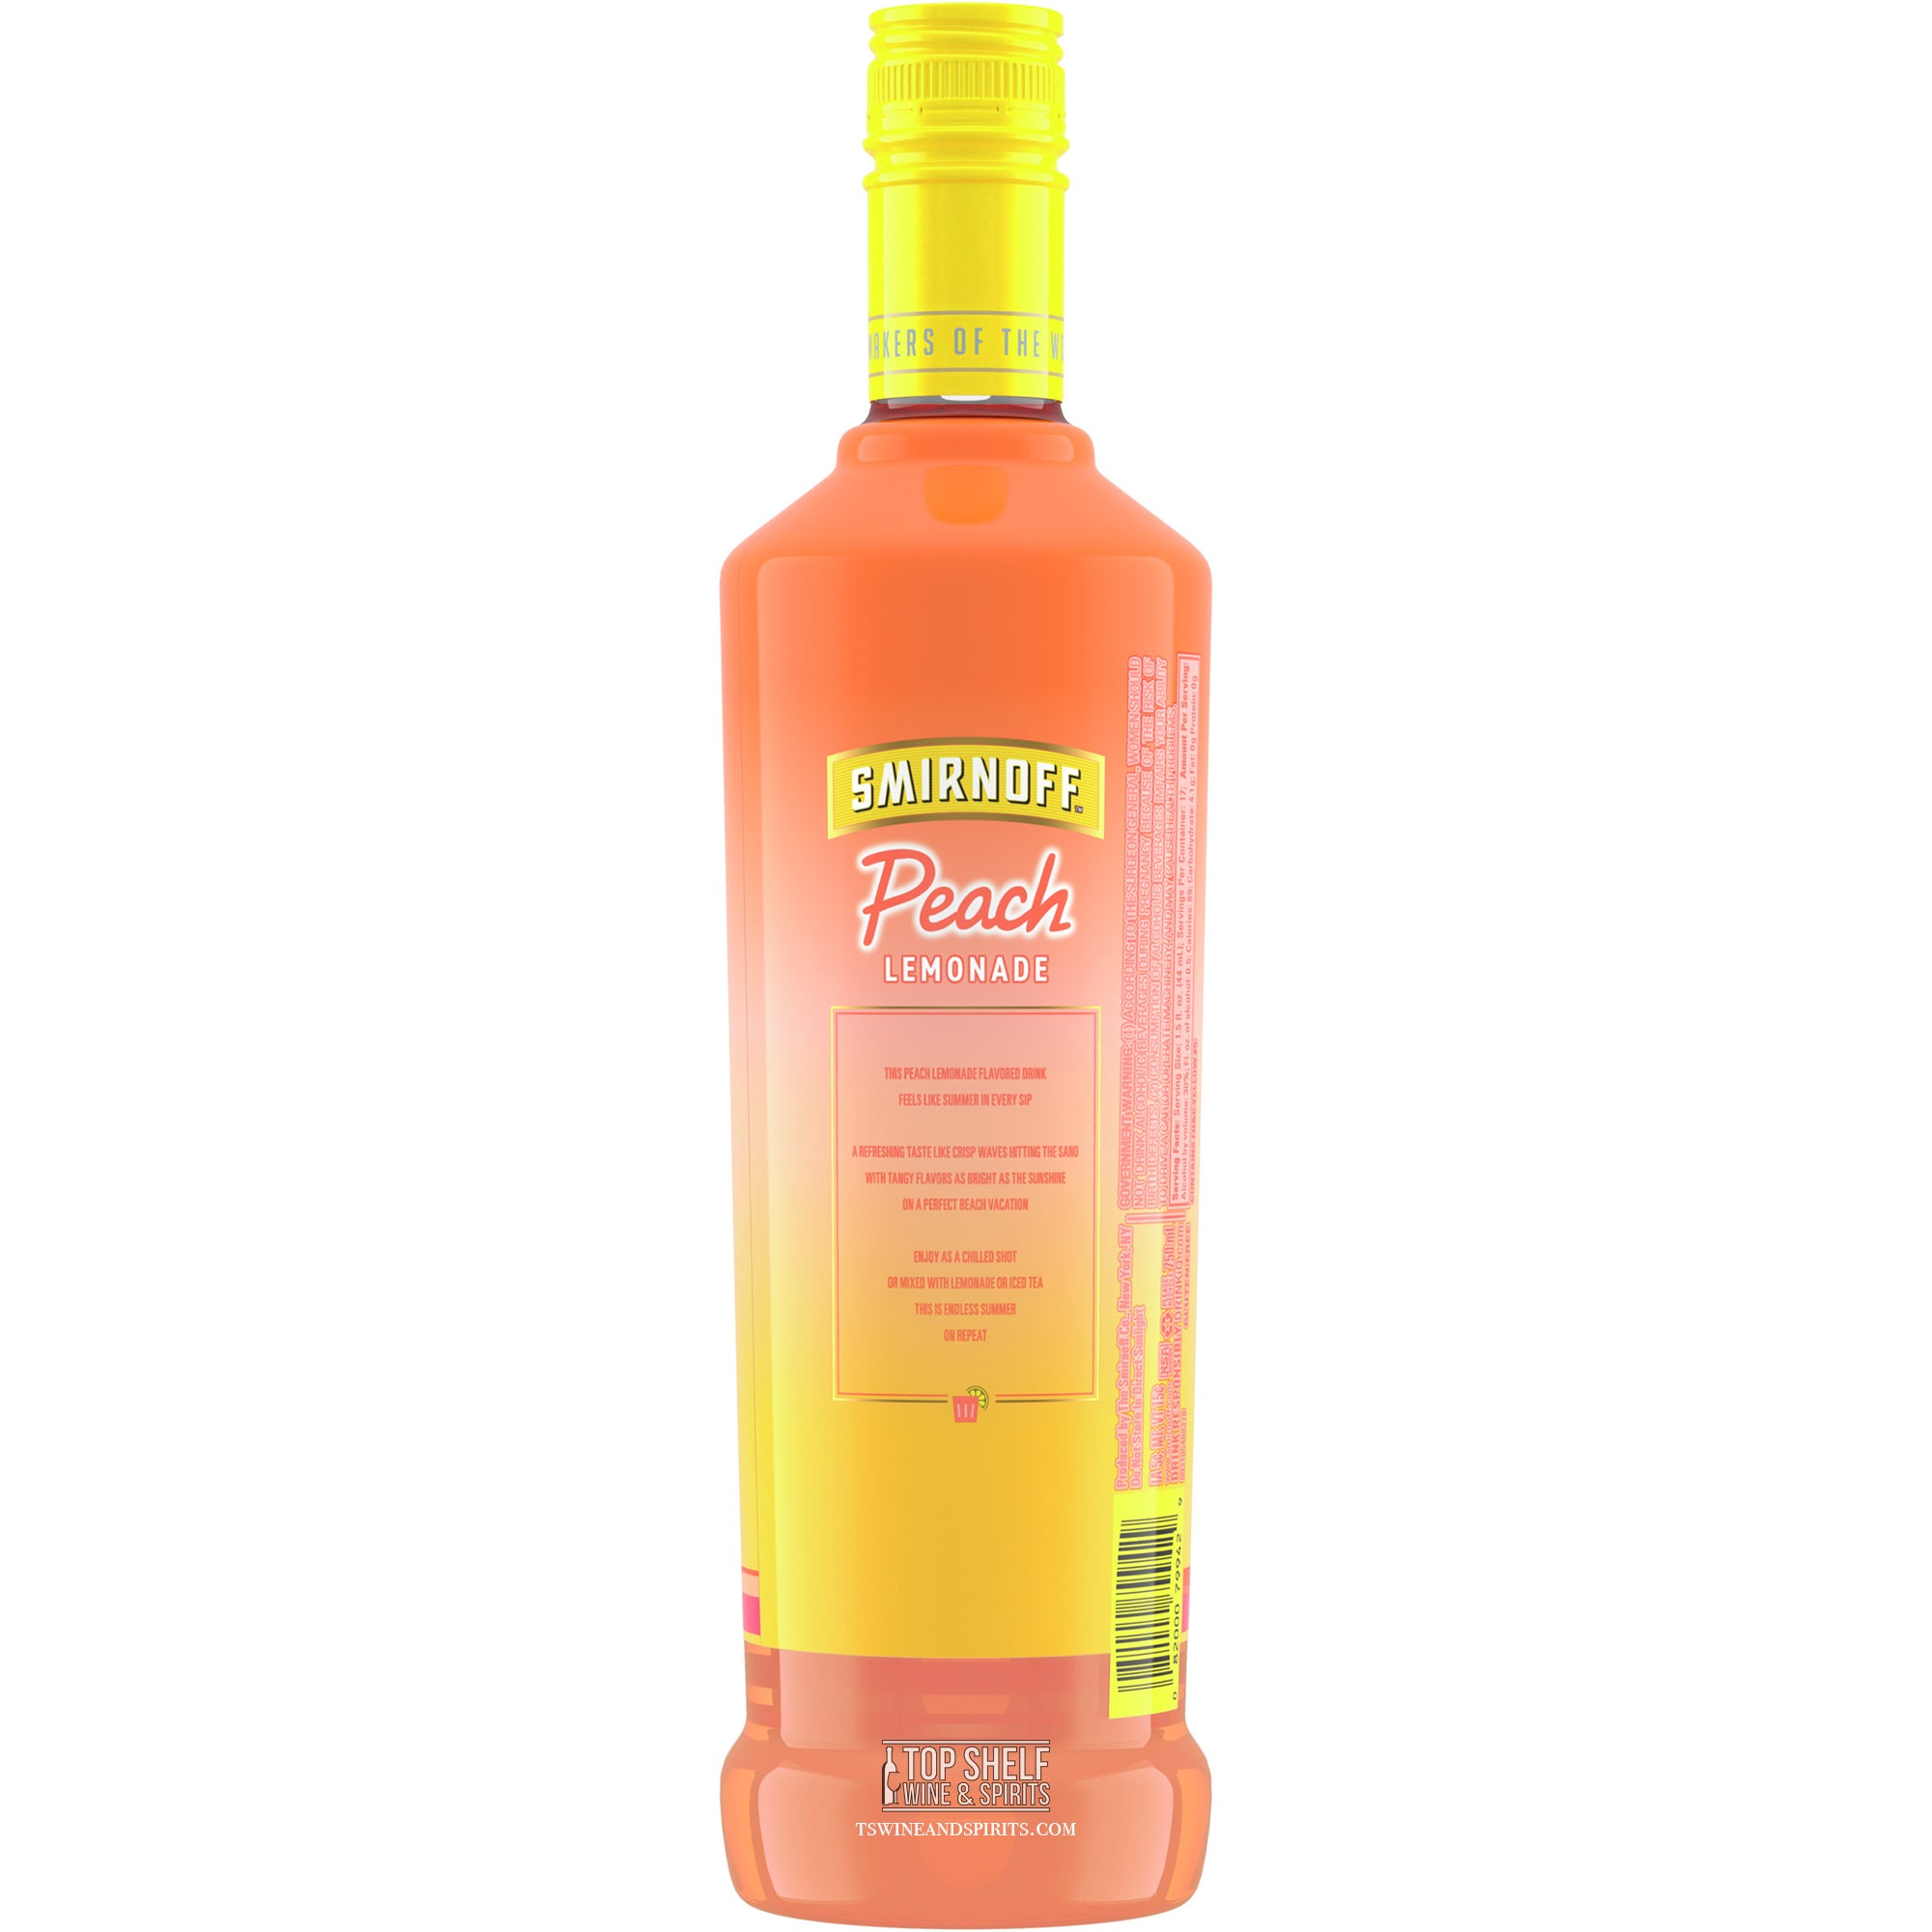 Smirnoff Peach Lemonade Limited Edition Vodka